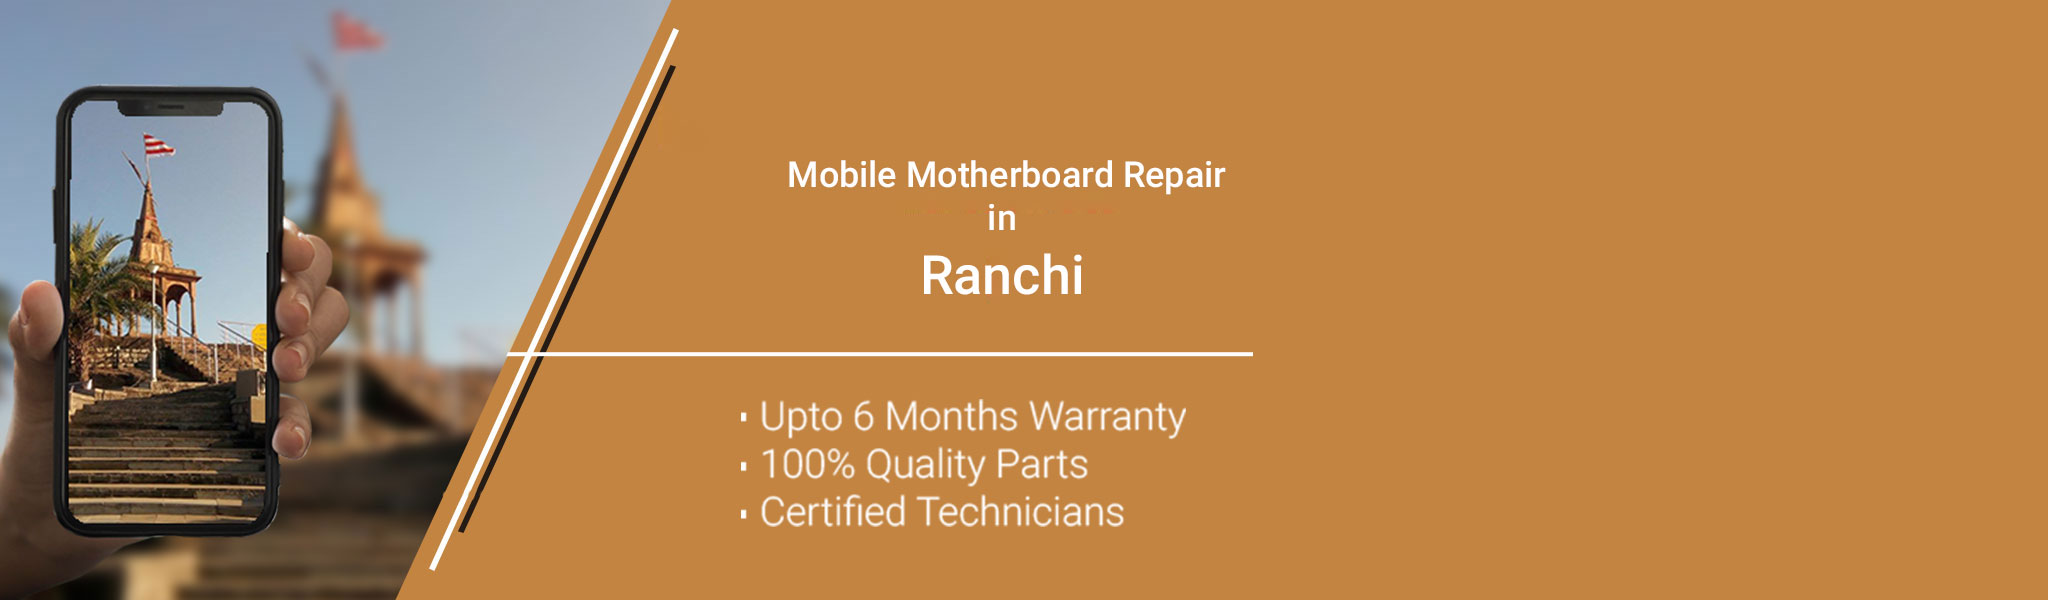 Ranchi_Motherboard.jpg